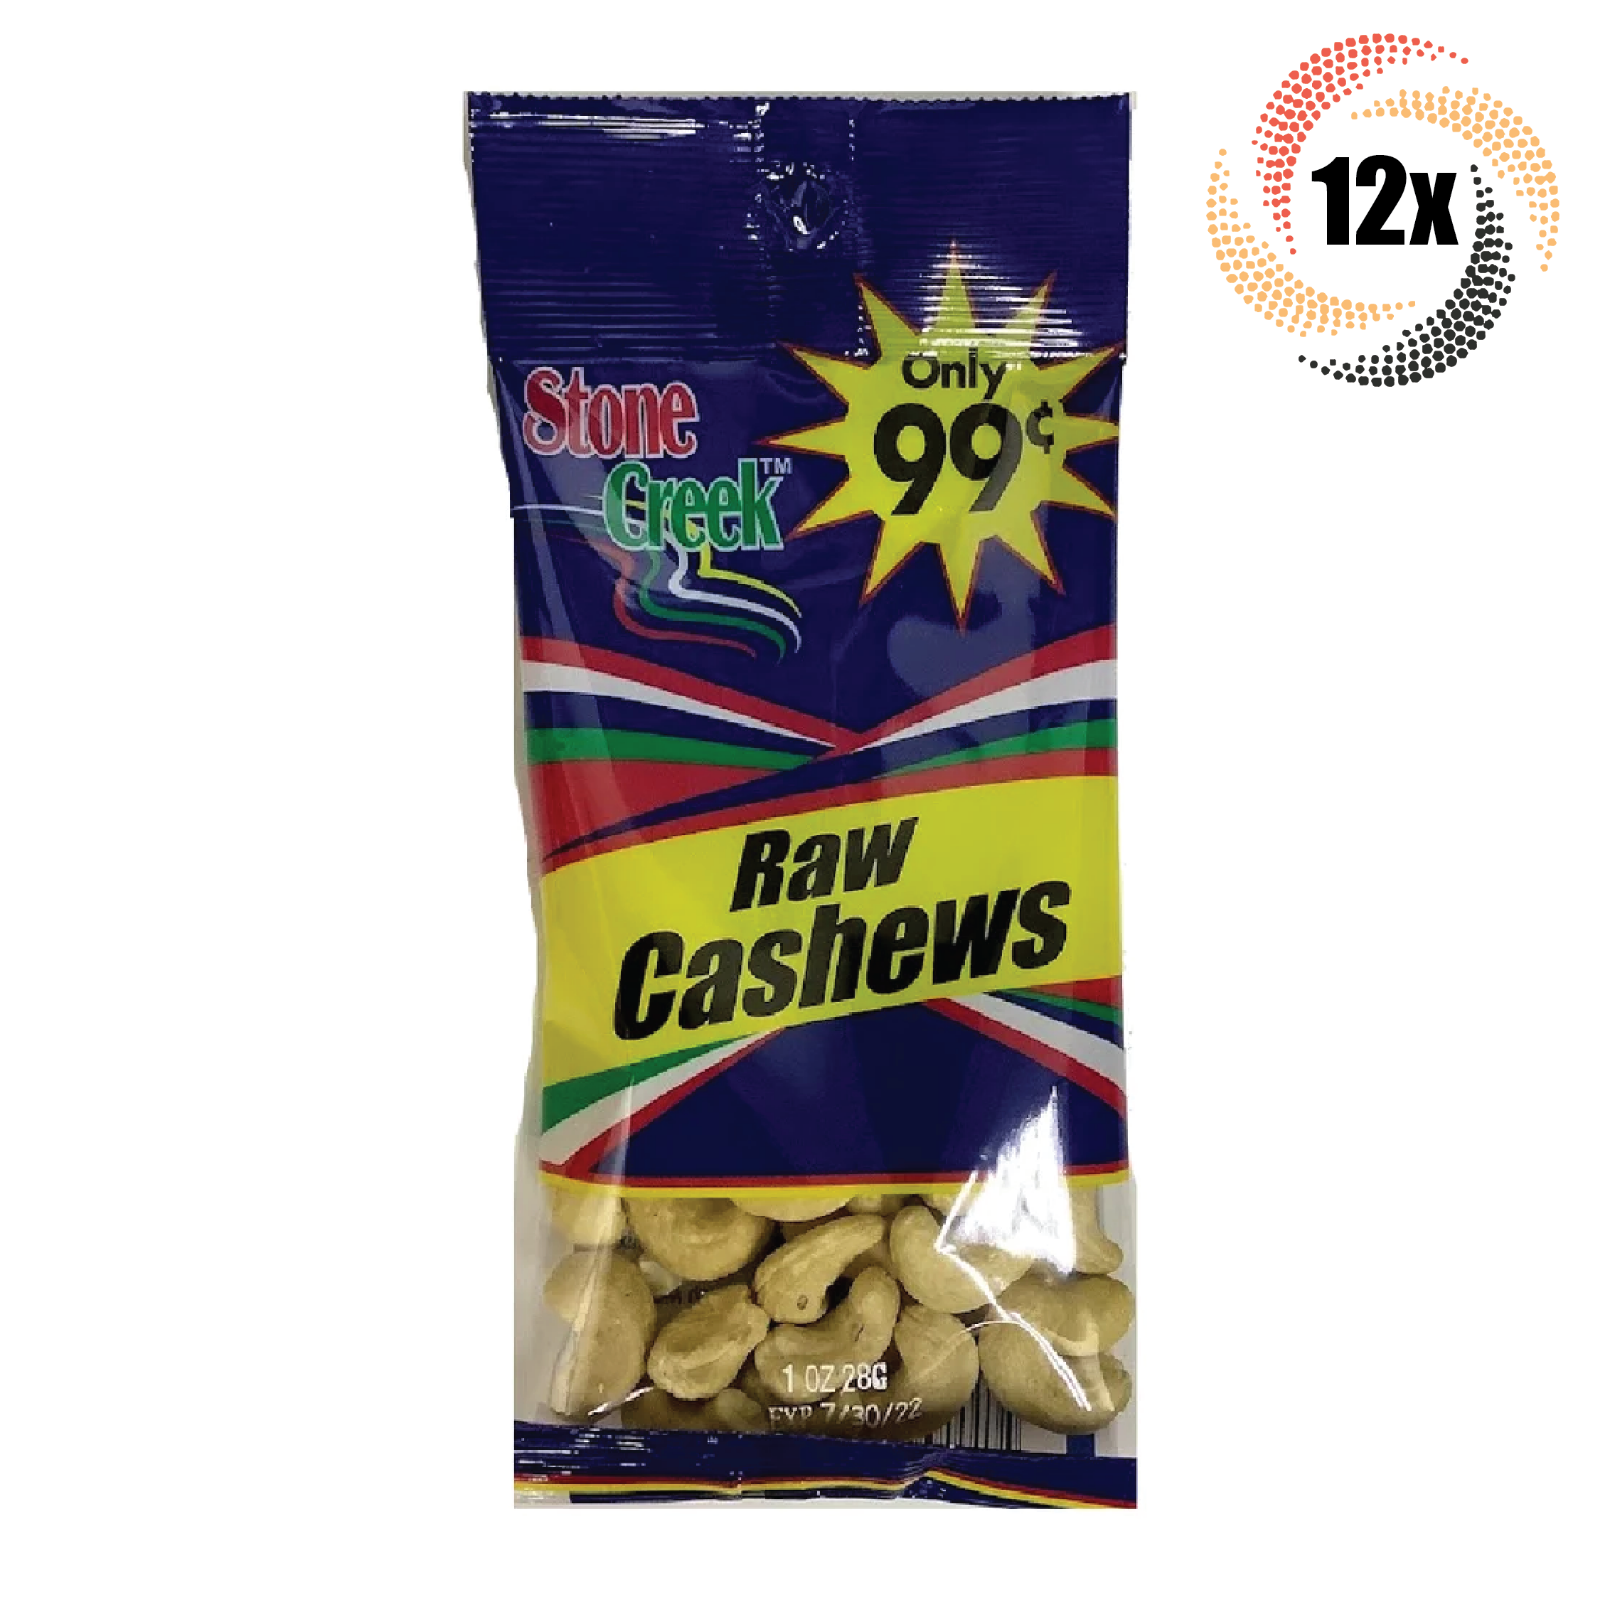 12x Bags Stone Creek High Quality Raw Cashews | 4.5oz | Fast Shipping - $23.06